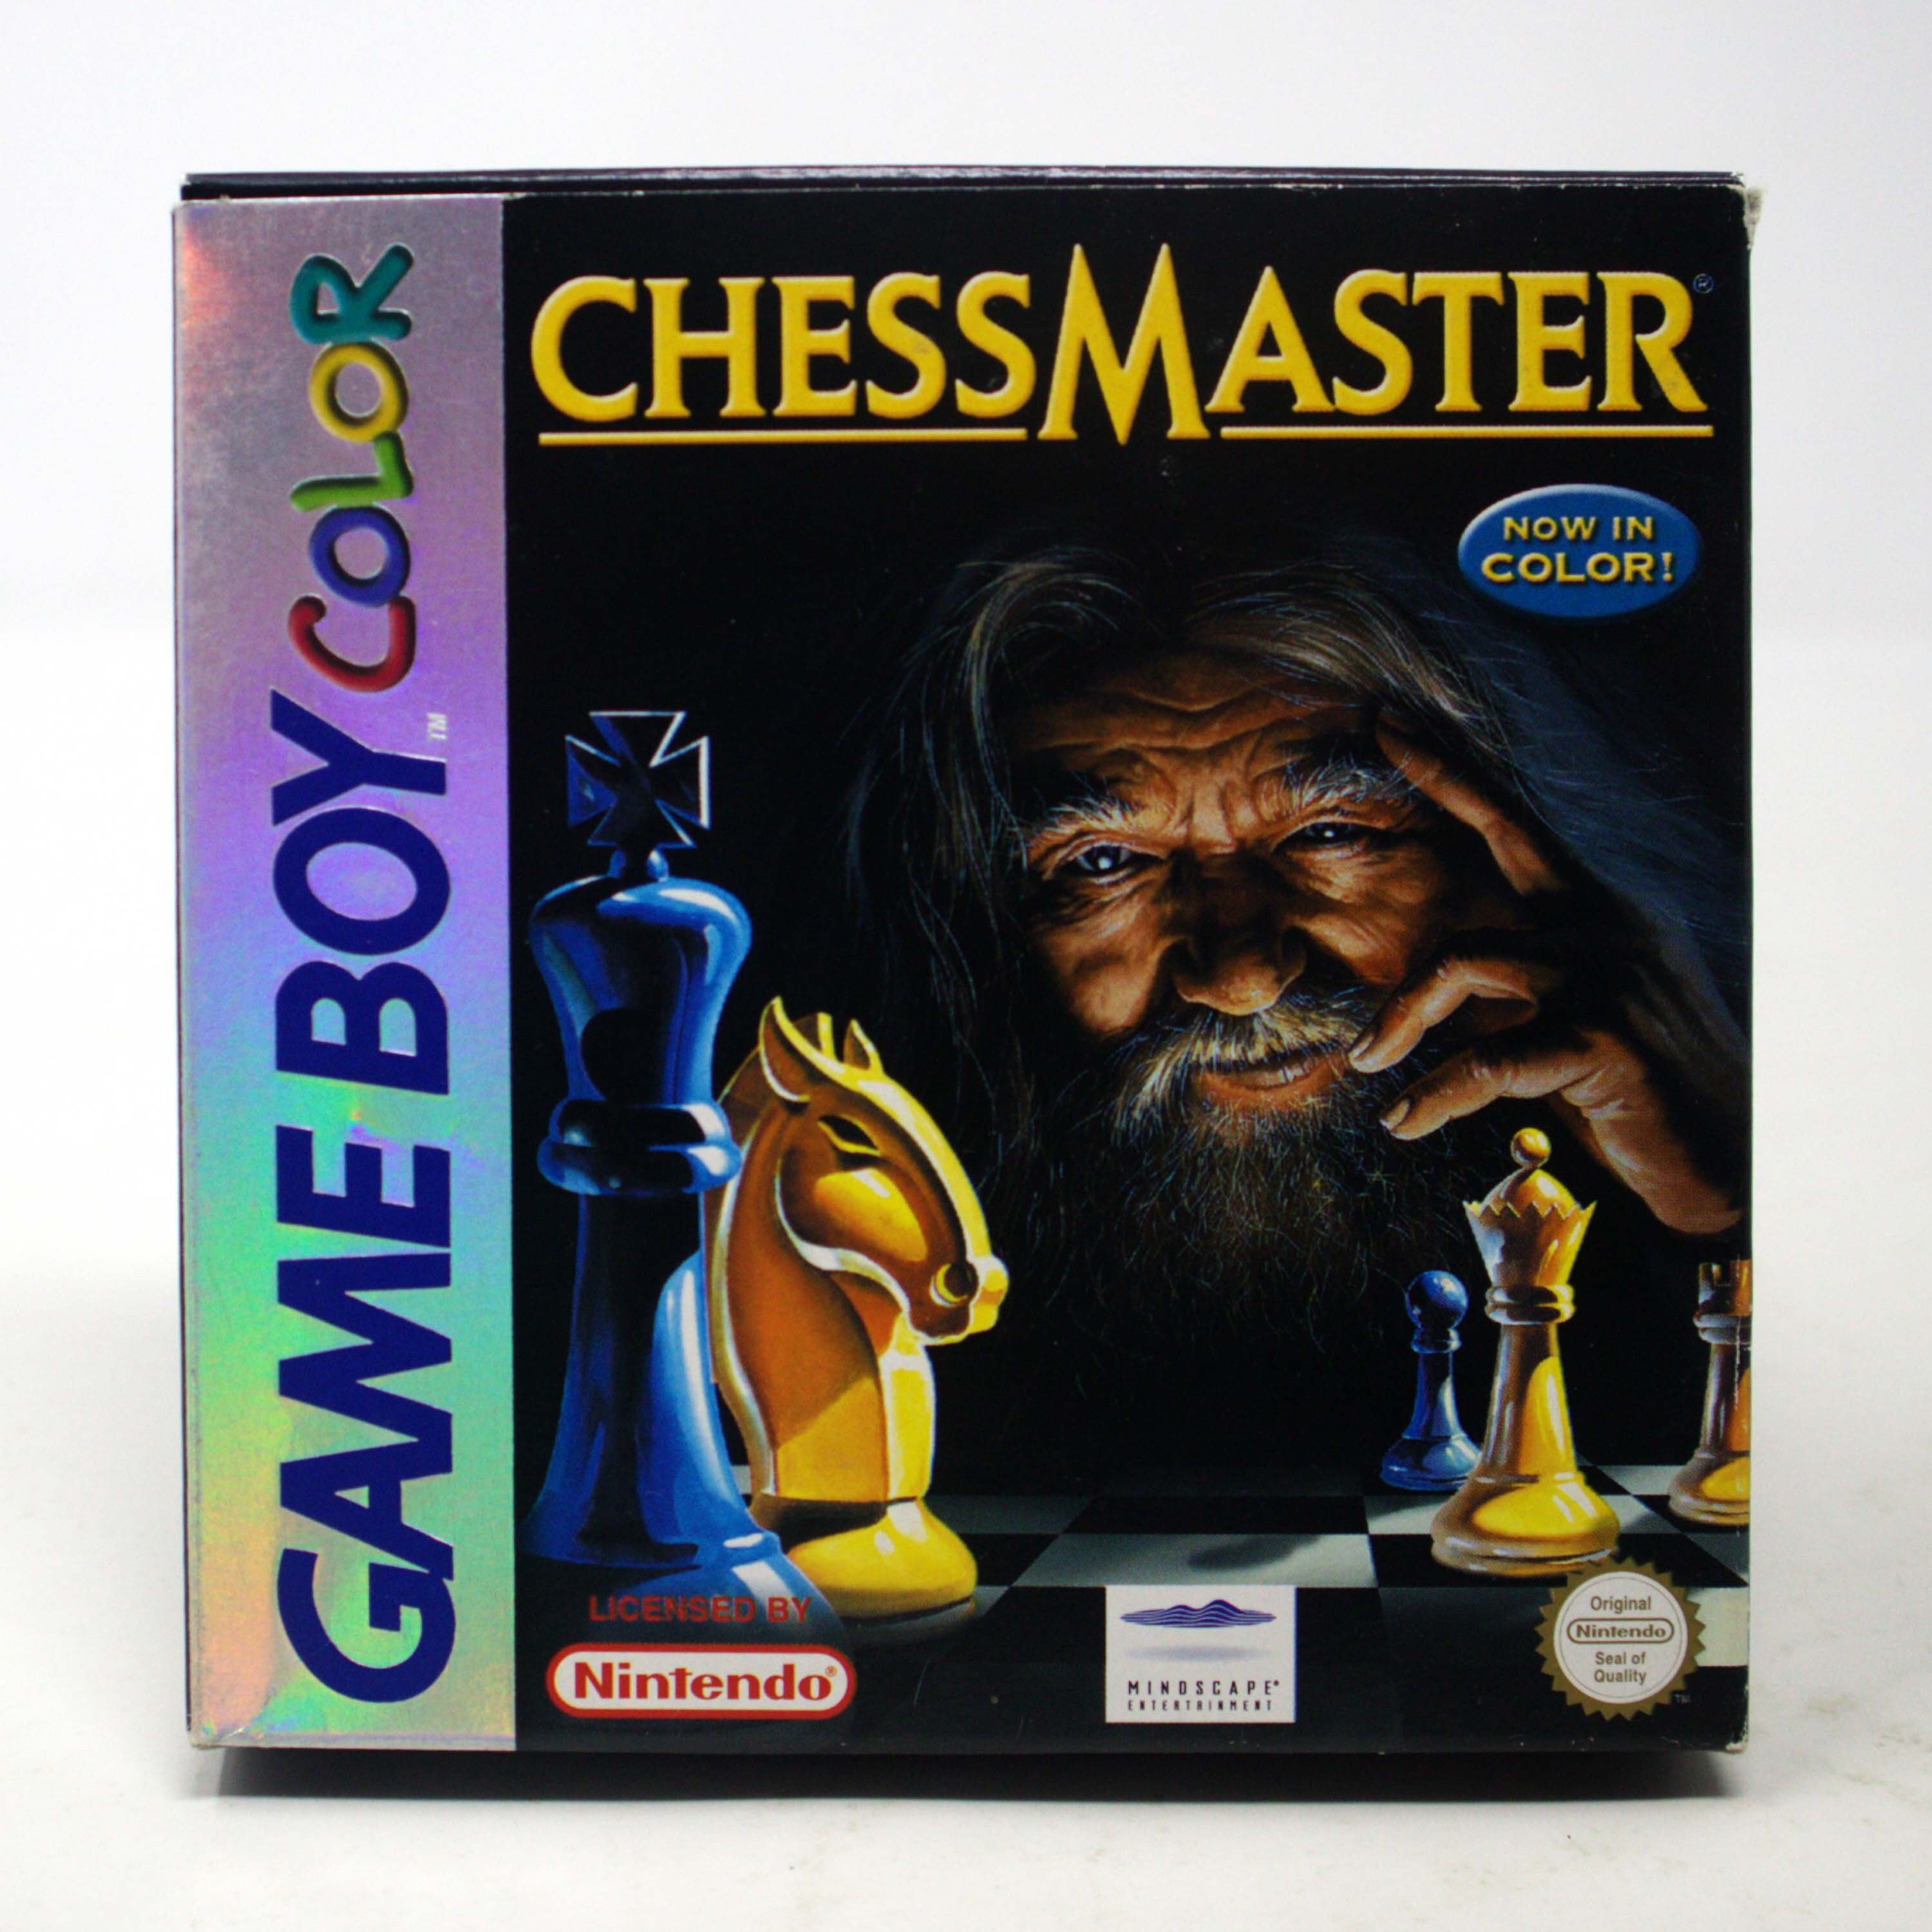  Chessmaster 5500 : Video Games